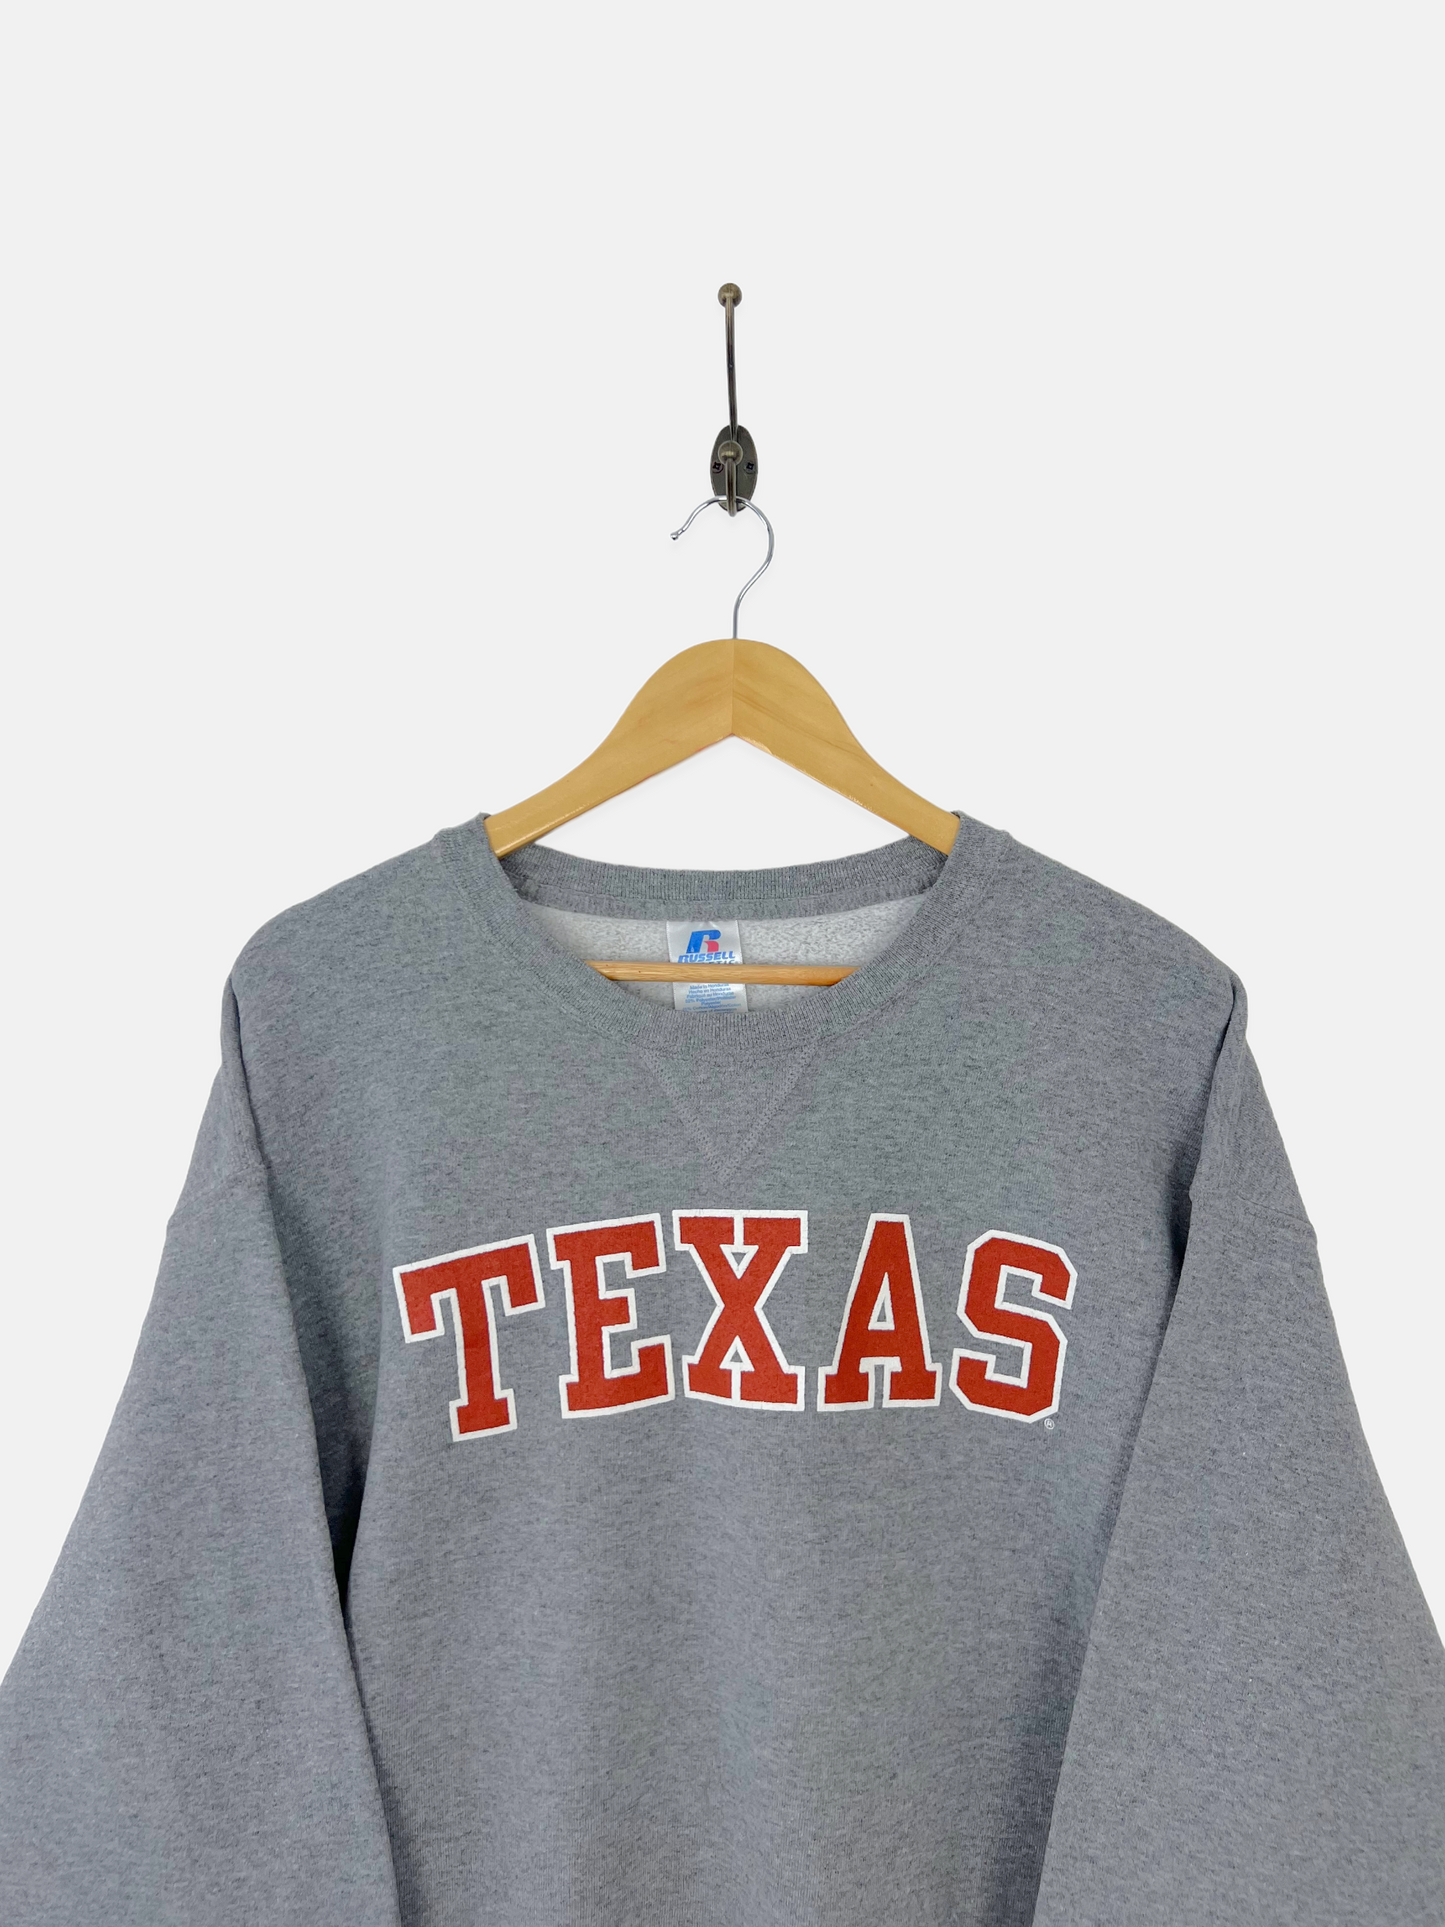 90's Texas Vintage Sweatshirt Size L-XL